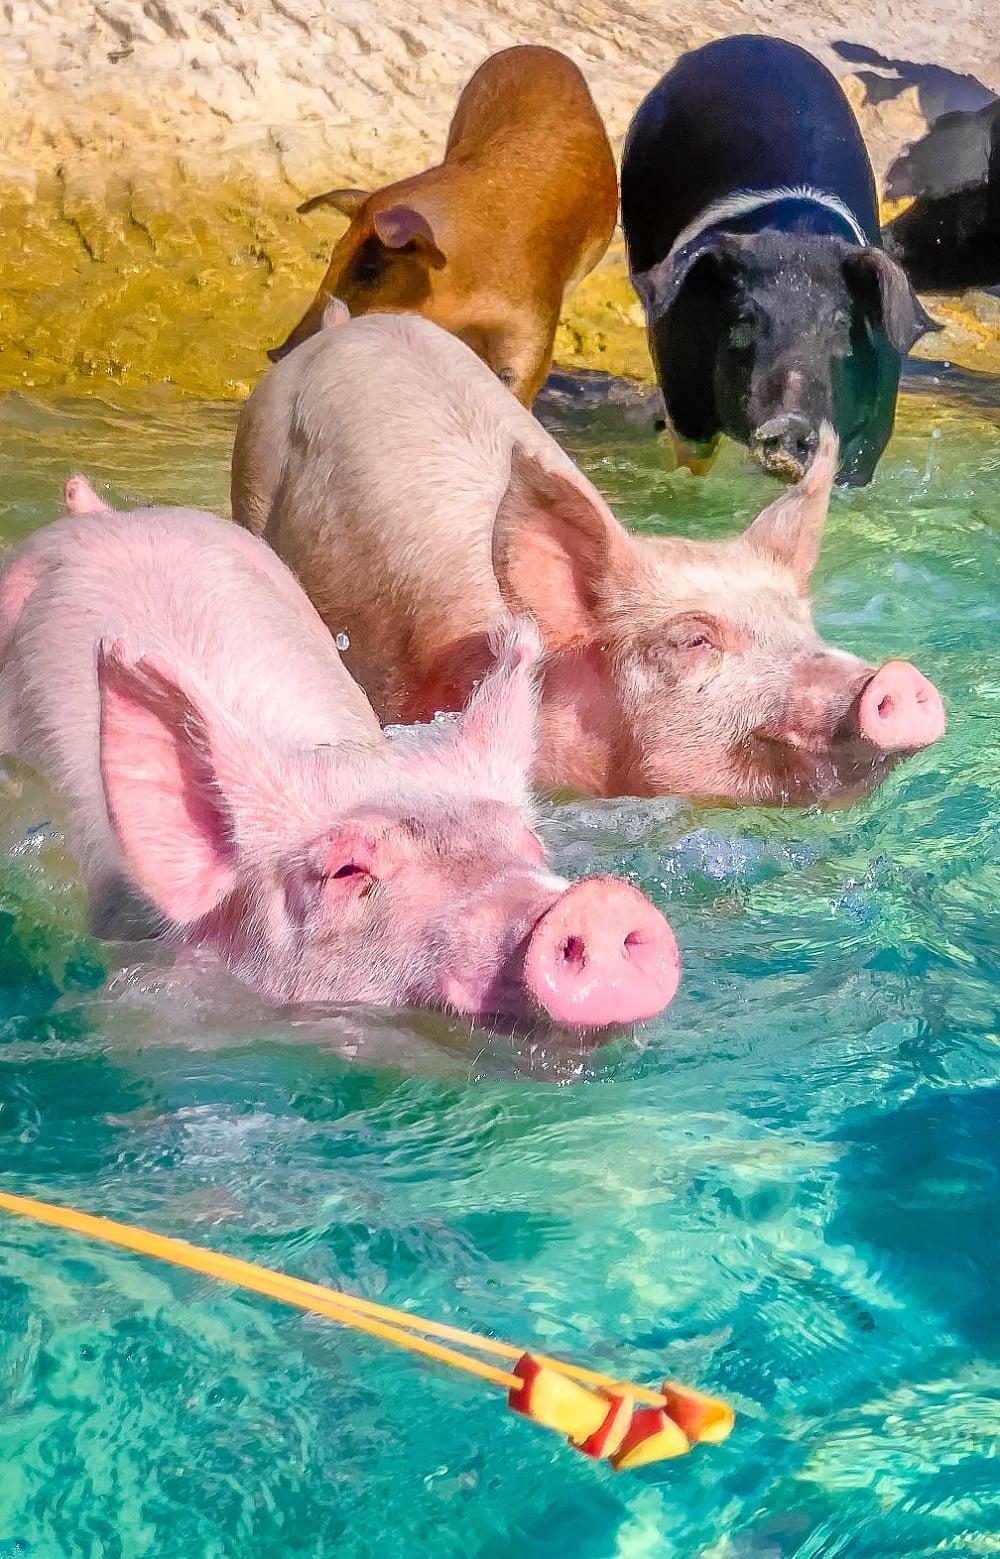 Bahamas Swimming Pigs